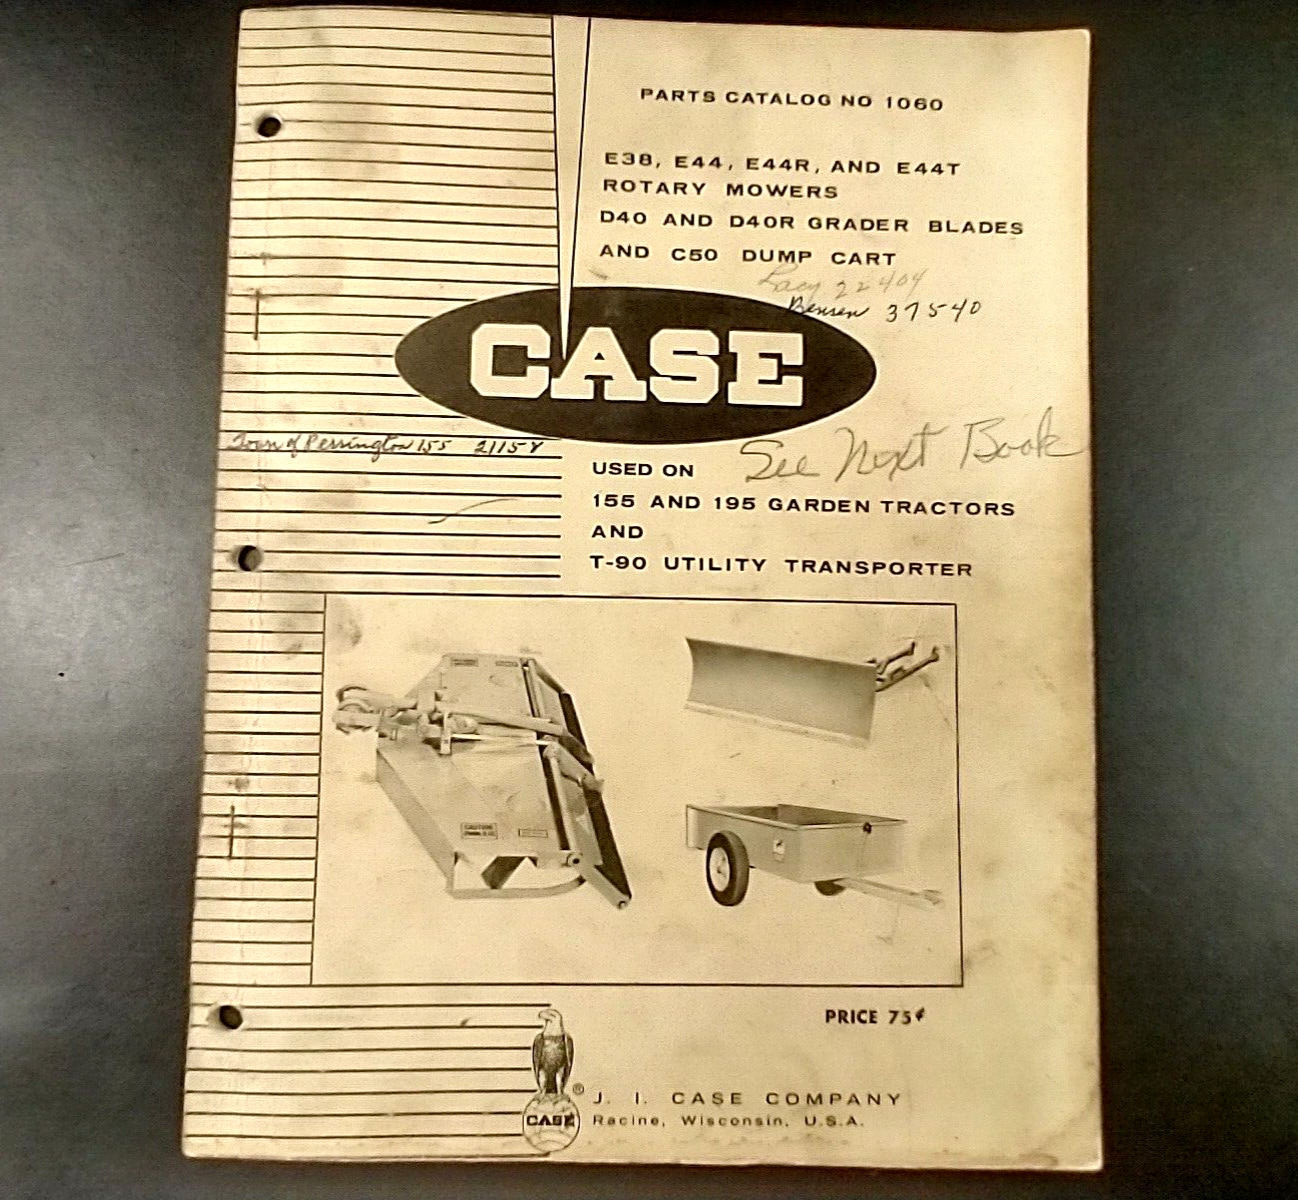 Vintage Parts Manual Case Rotary Mower E38 E44 E44R E44T Dump Cart C50 Blade D40